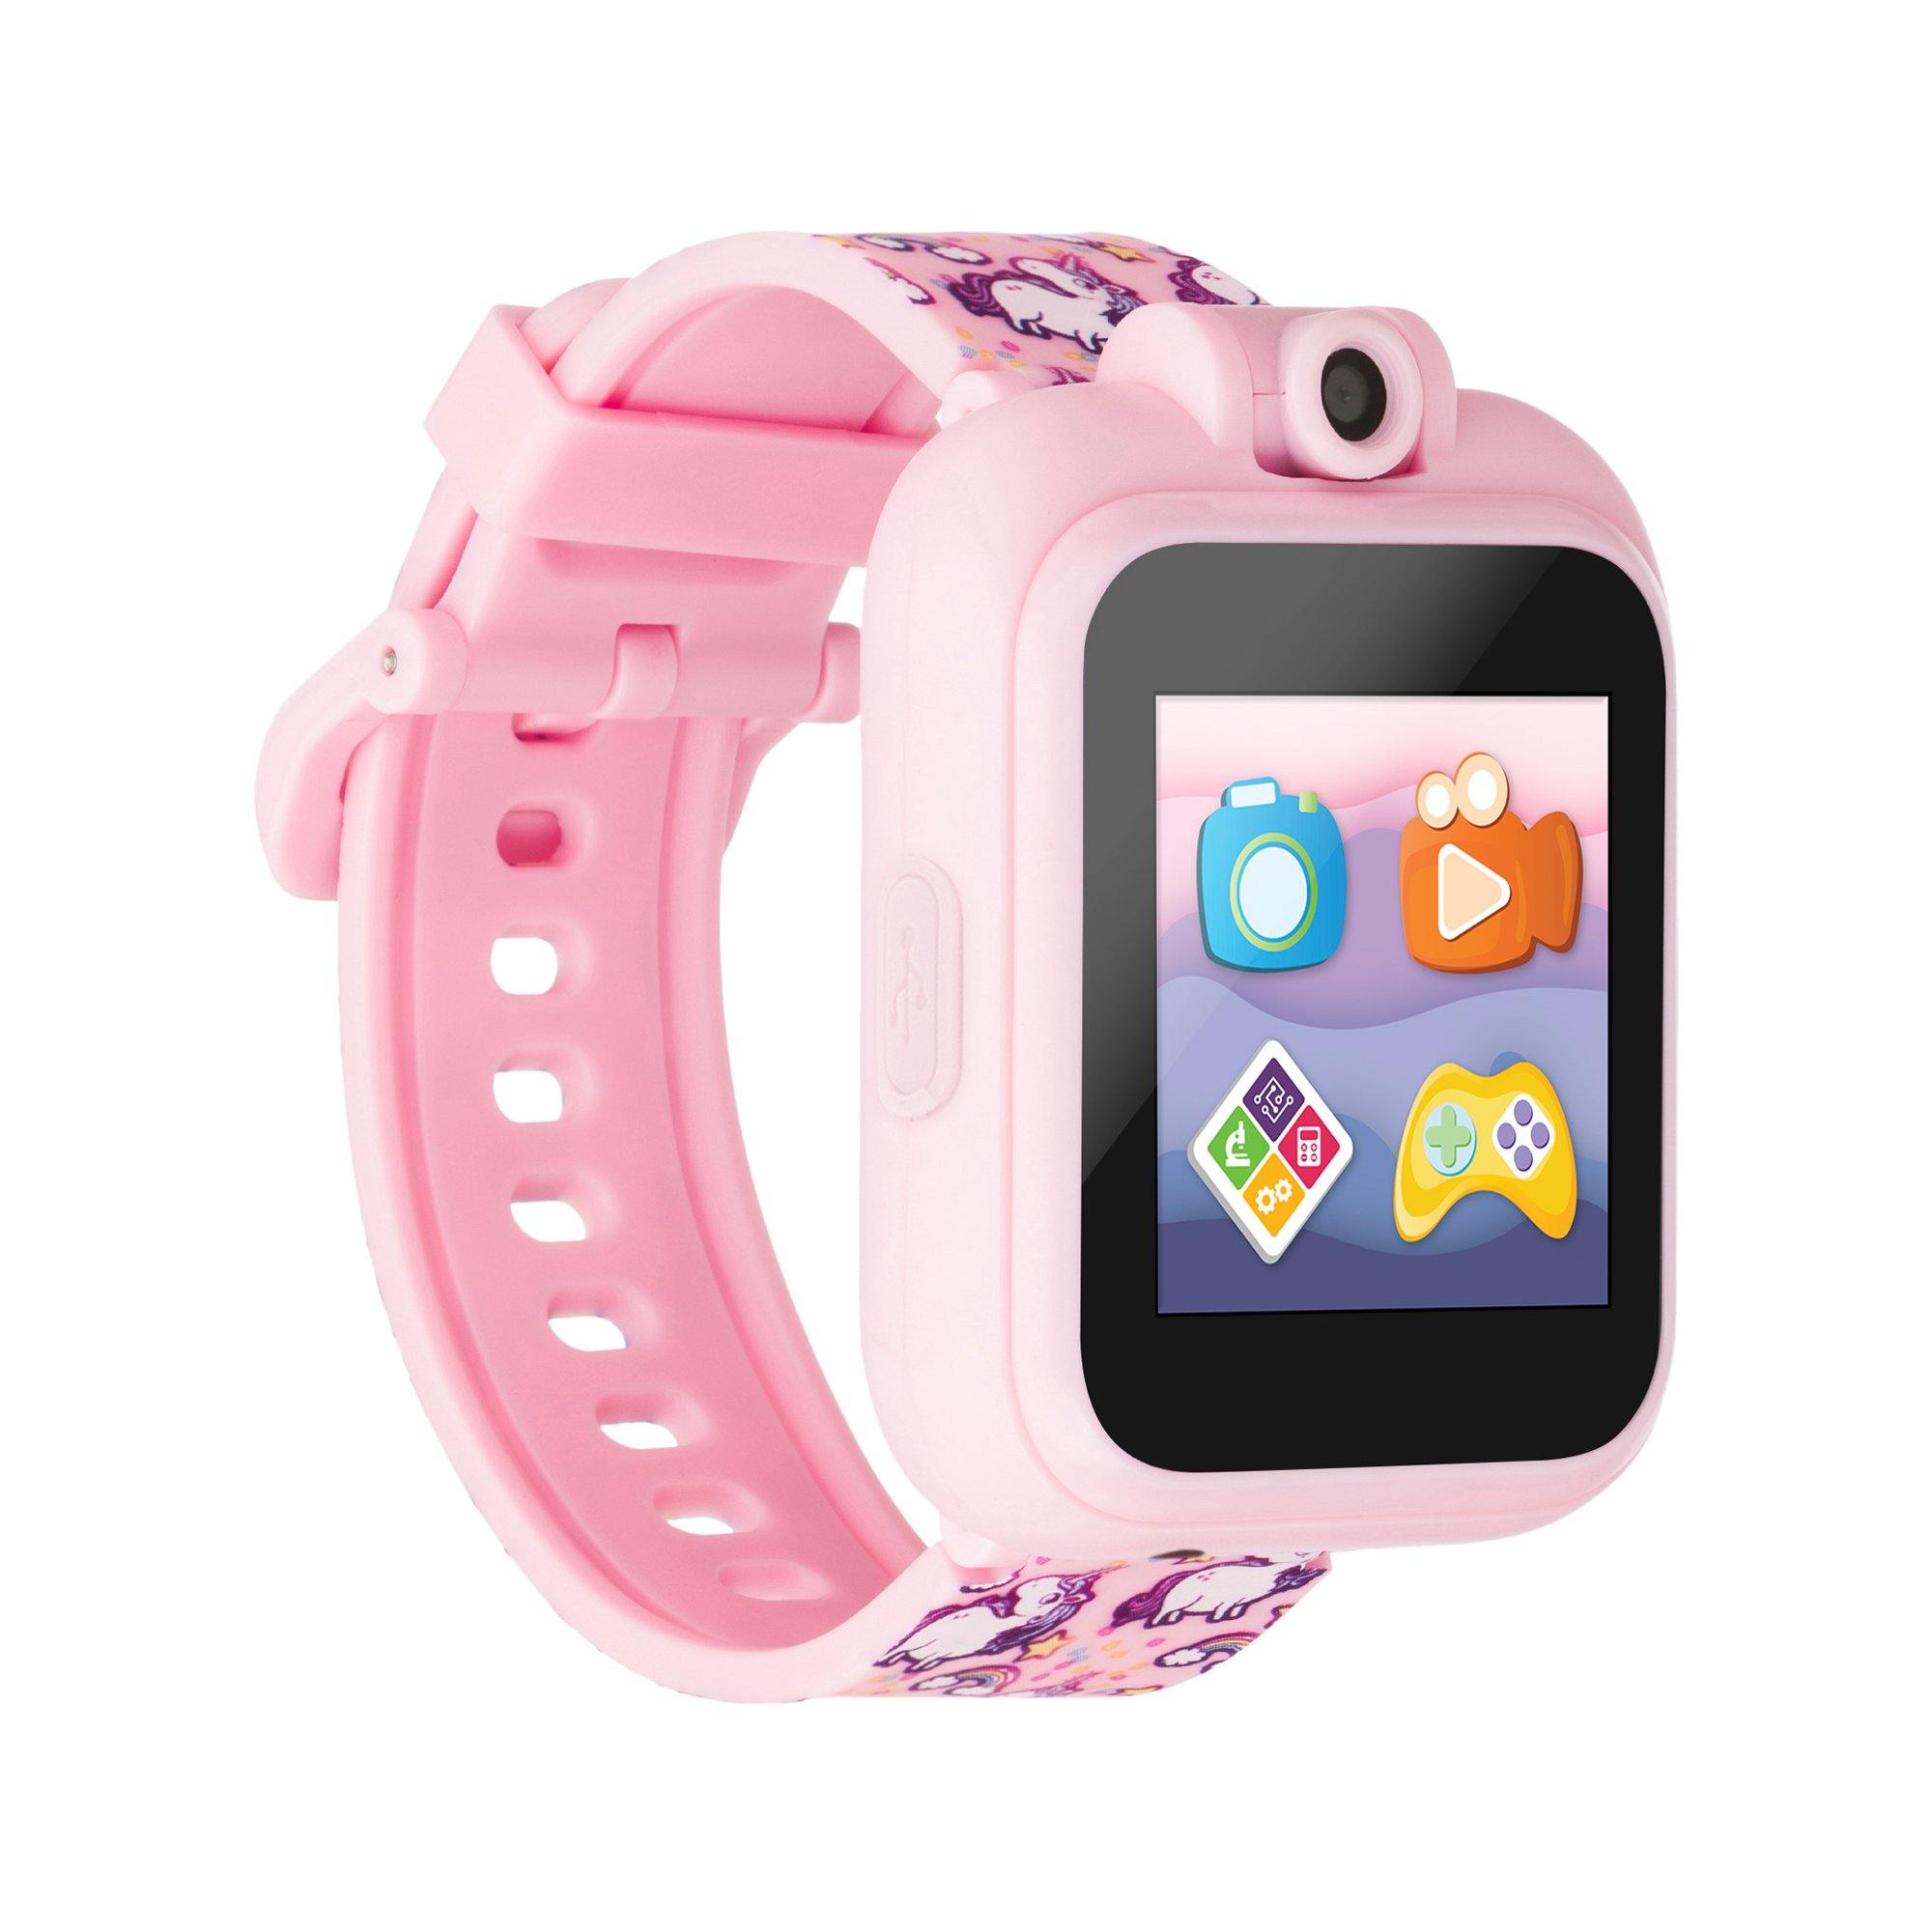 PlayZoom 2 Kids Smartwatch: Pink Unicorn Print affordable smart watch